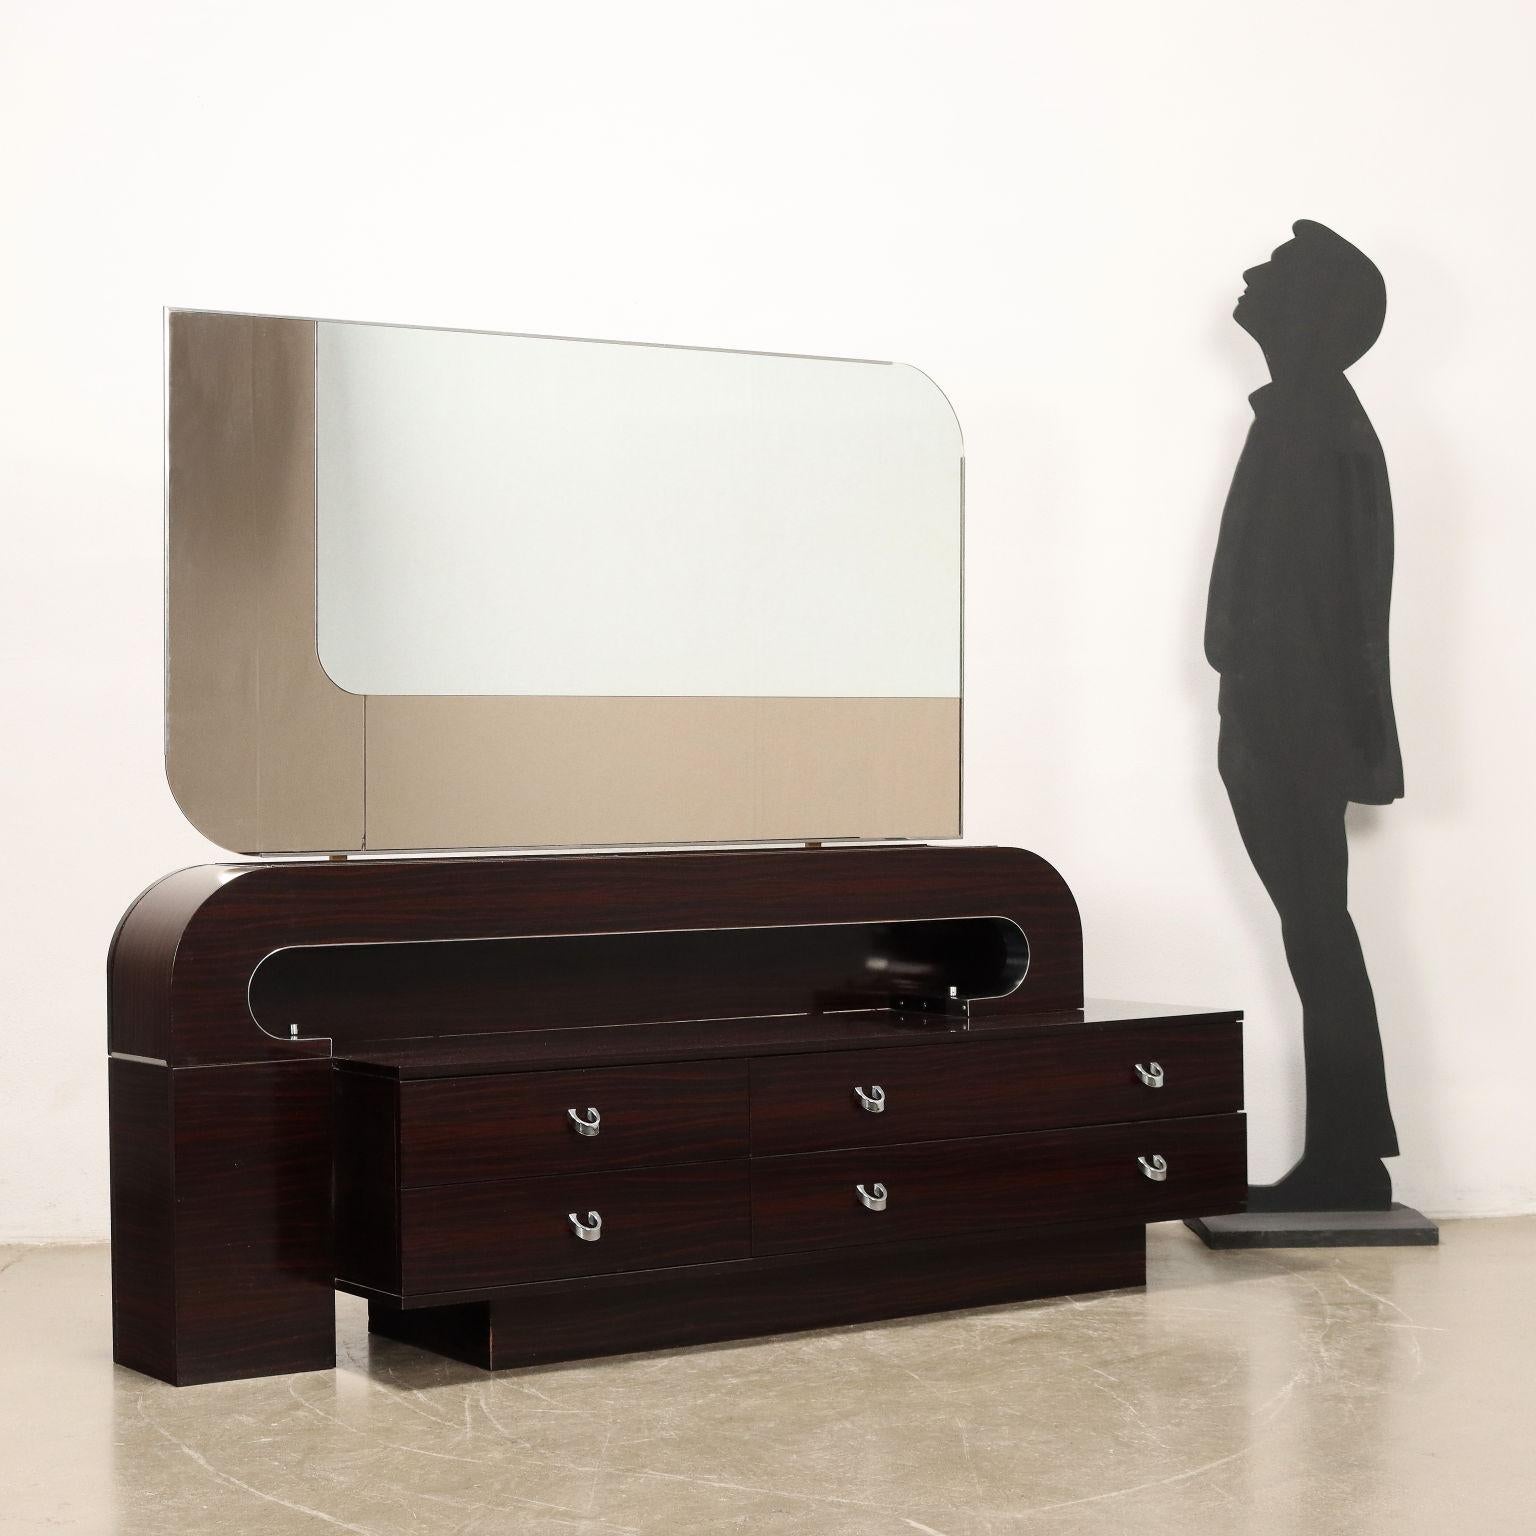 Dresser with mirror, side lights (not serviced) in exotic wood veneer.